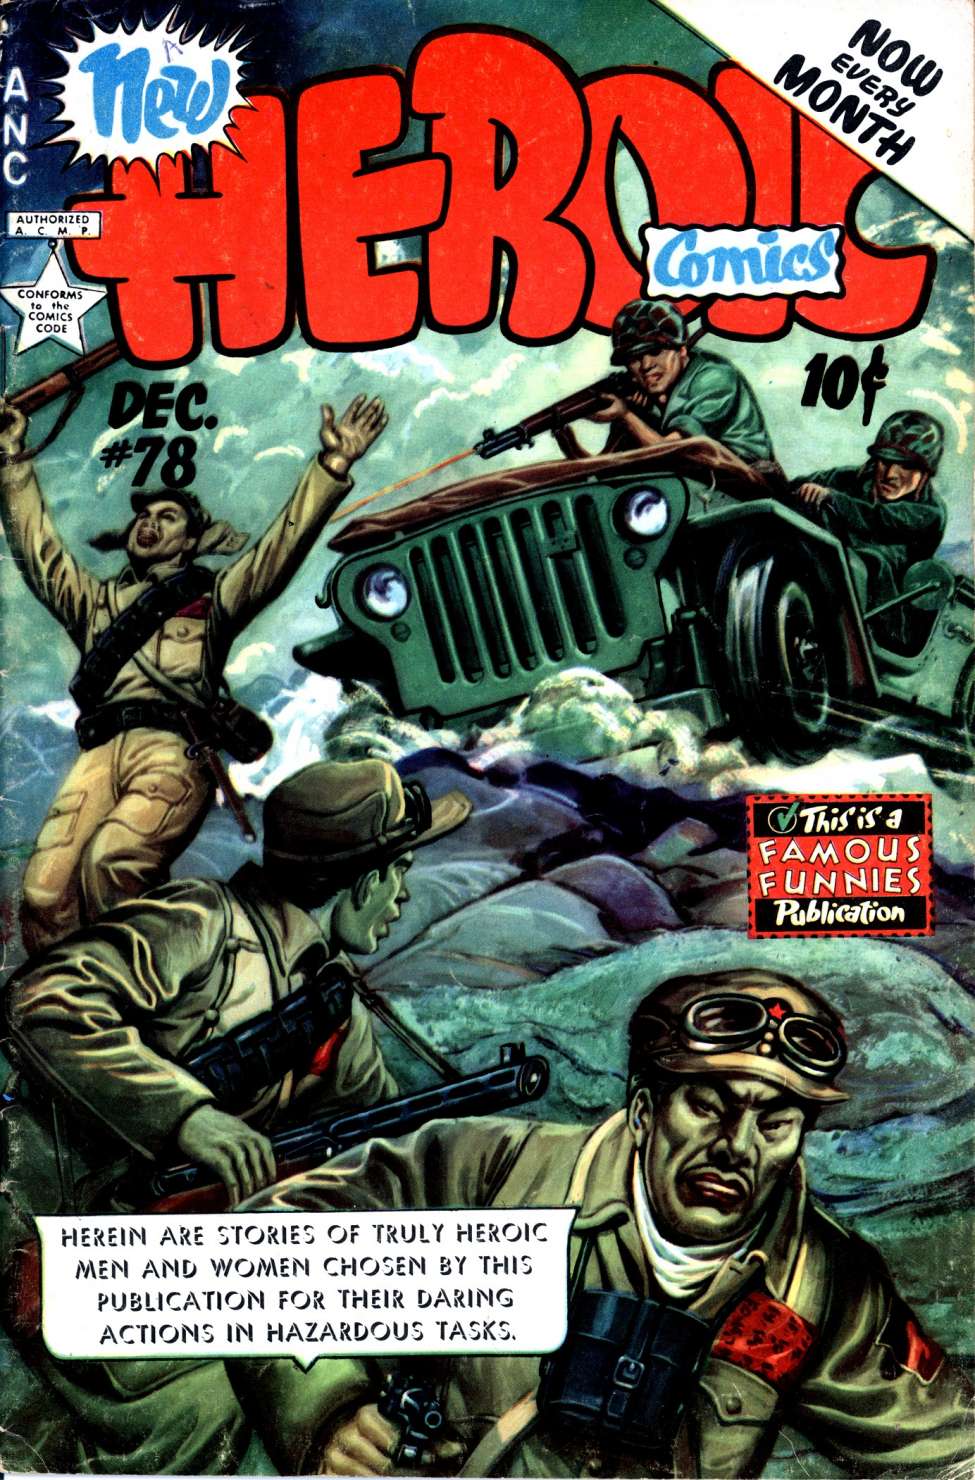 Comic Book Cover For New Heroic Comics 78